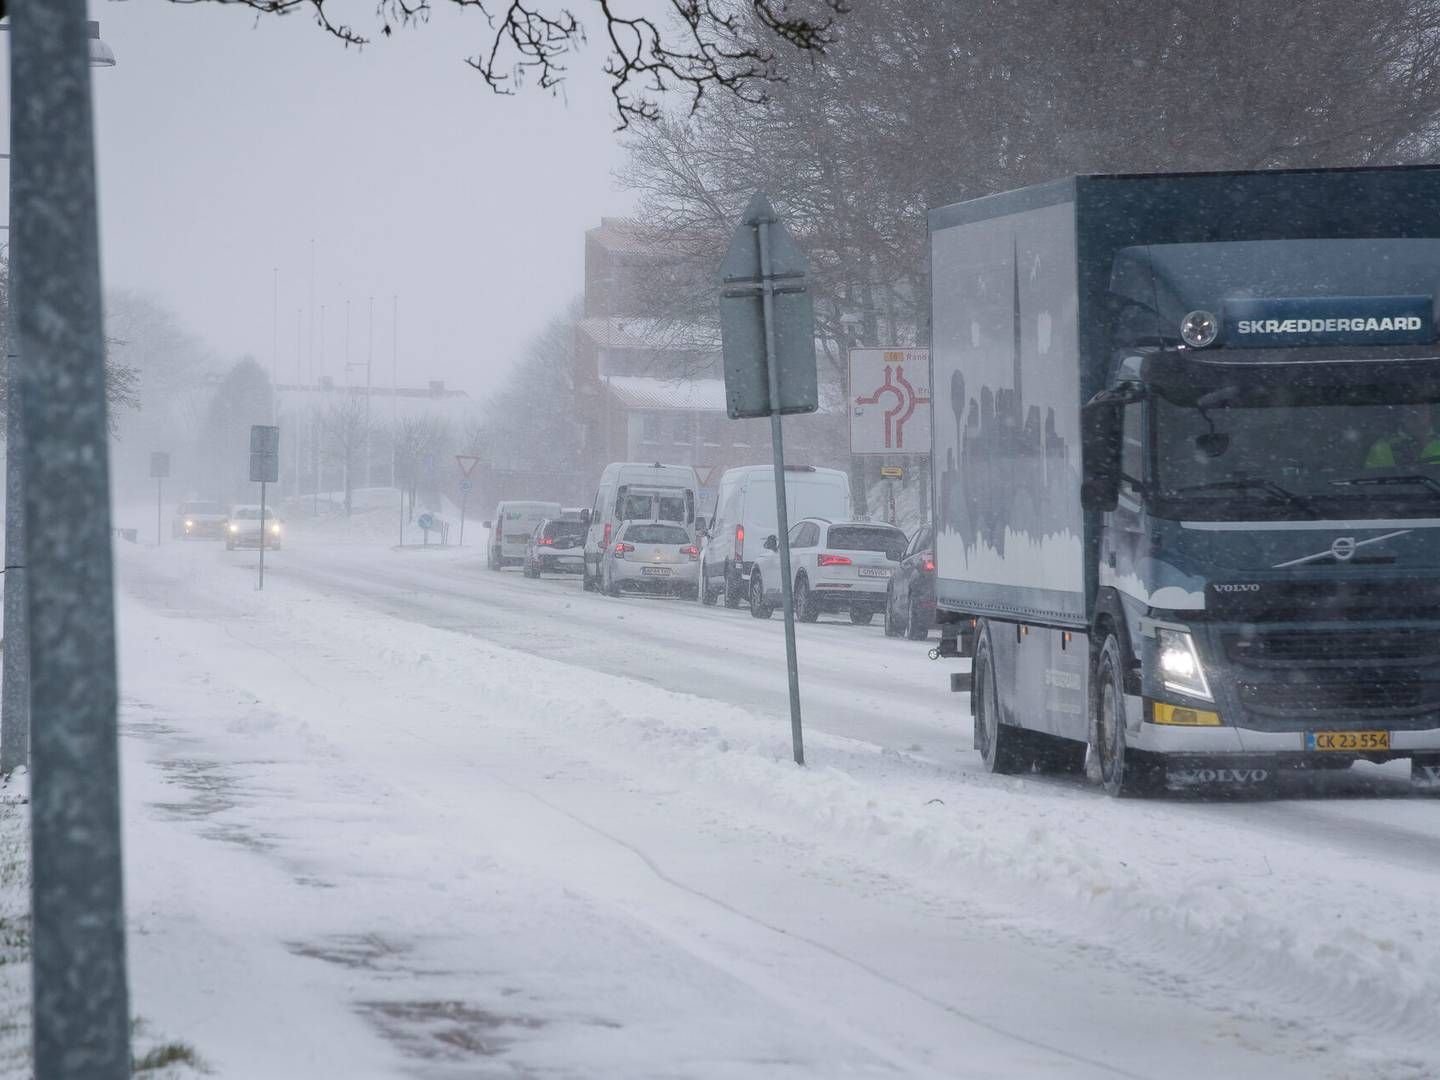 Manglende krav om vinterdæk spiller ofte en rolle i trafikale problemer, når sneen falder, mener speditør-boss. | Foto: Johnny Pedersen/Ritzau Scanpix